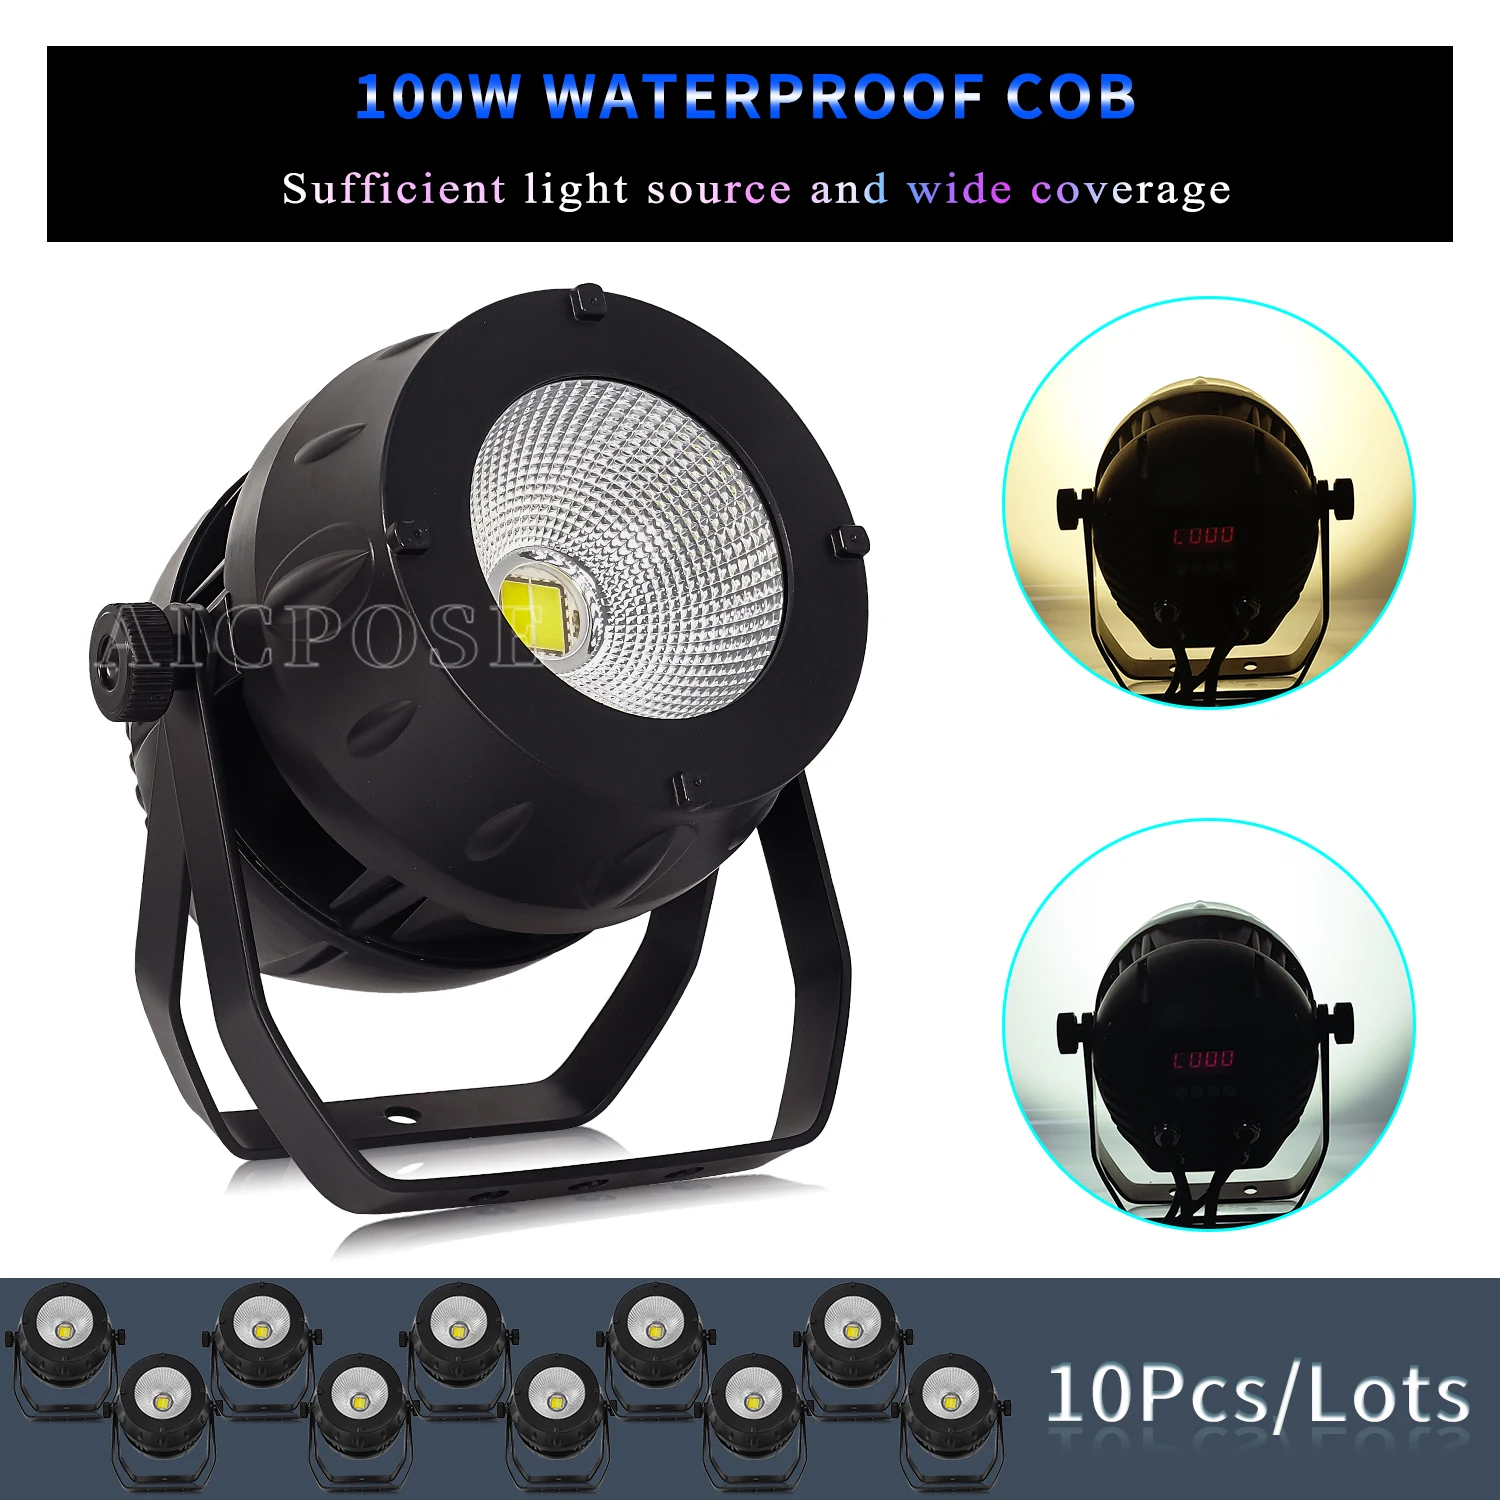 

10Pcs/Lots 100W/200W IP65 Waterproof Par Light COB Stage Light Outdoor Waterproof Light Cool White Warm White DJ Disco Lighting